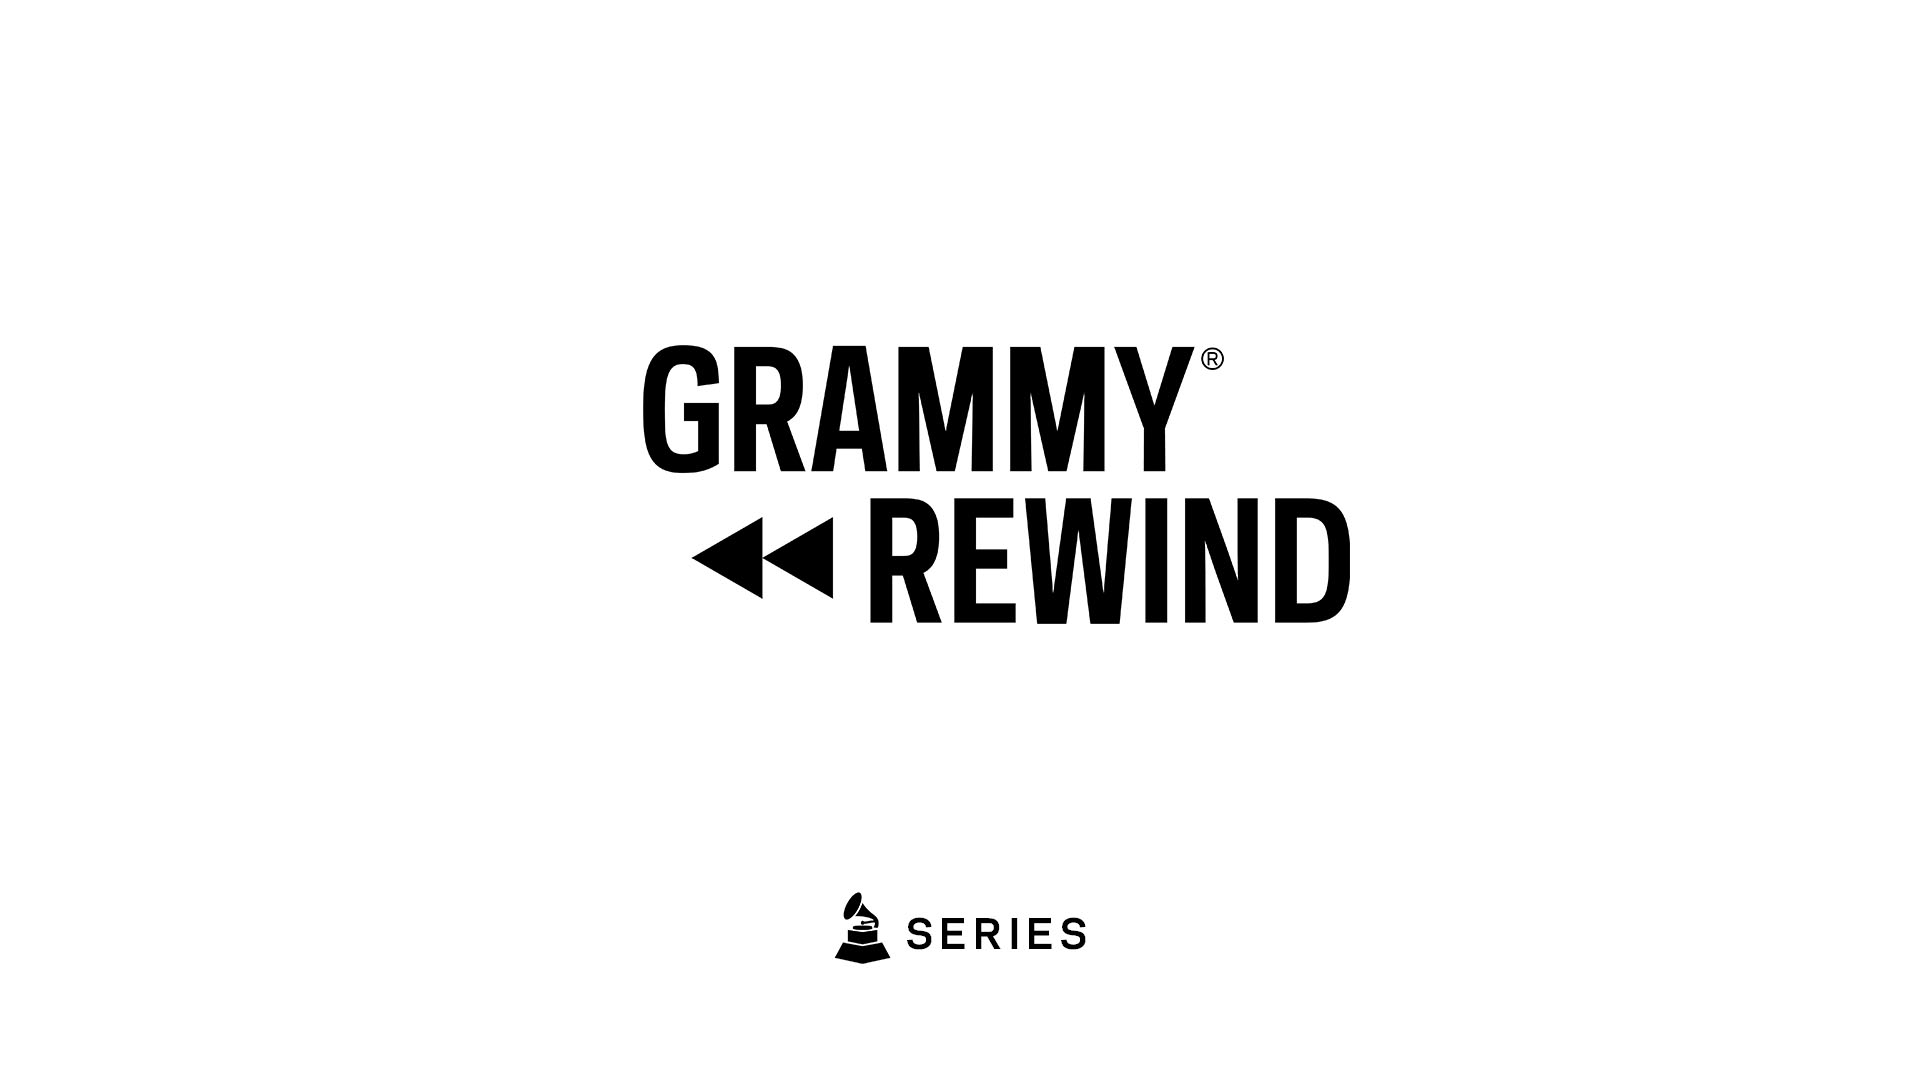 Watch Kendrick Lamar Win Best Rap Album For 'To Pimp a Butterfly' | GRAMMY Rewind